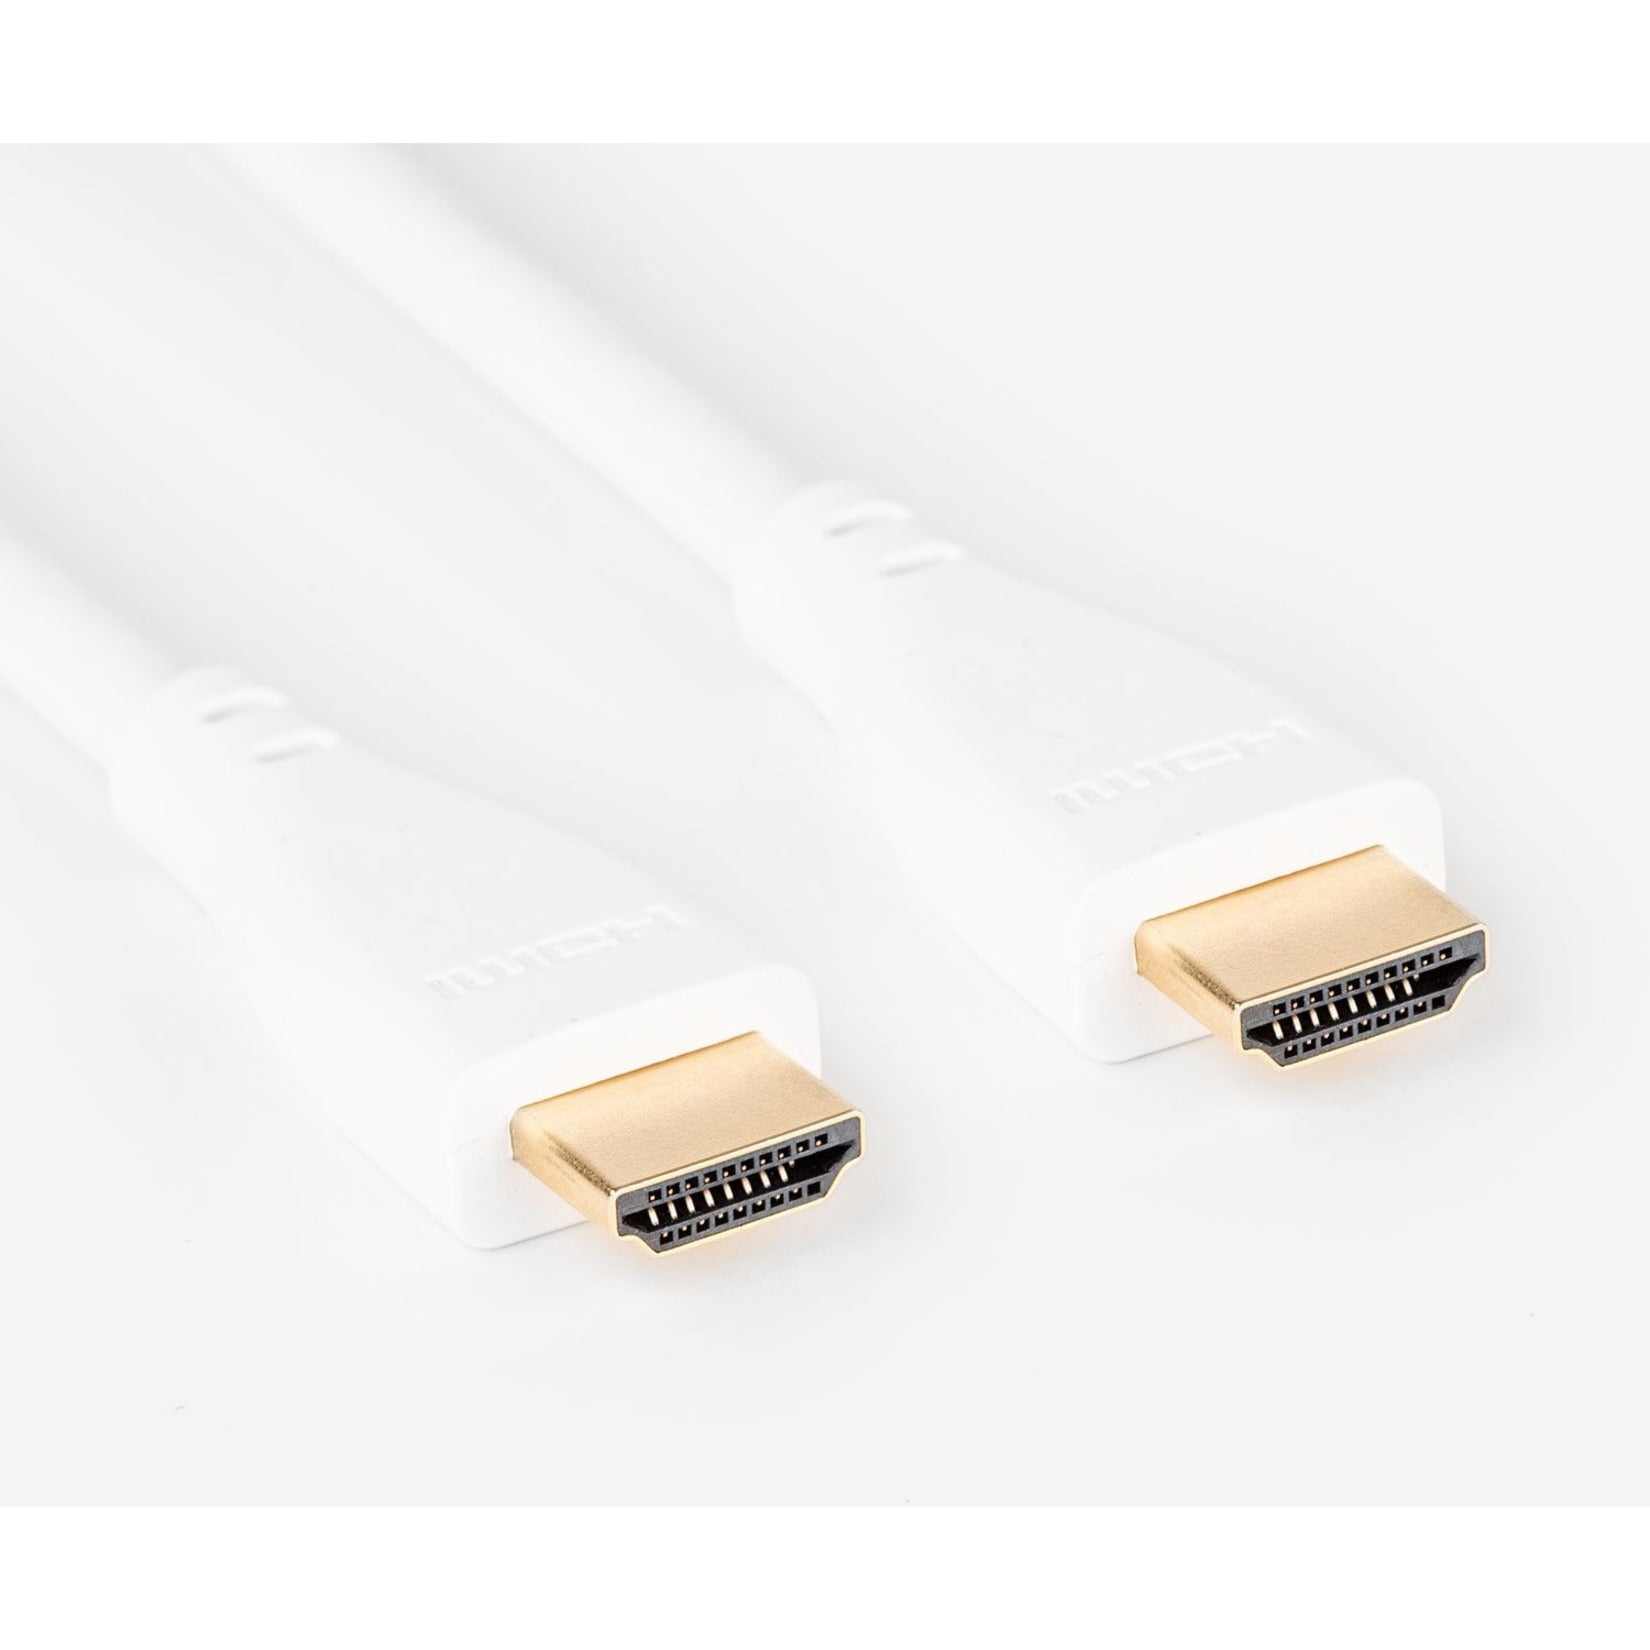 Rocstor Y10C159-W1 Premium HDMI Cable with Ethernet - 4K/60Hz, 3 ft, Gold-Plated Connectors, Lifetime Warranty